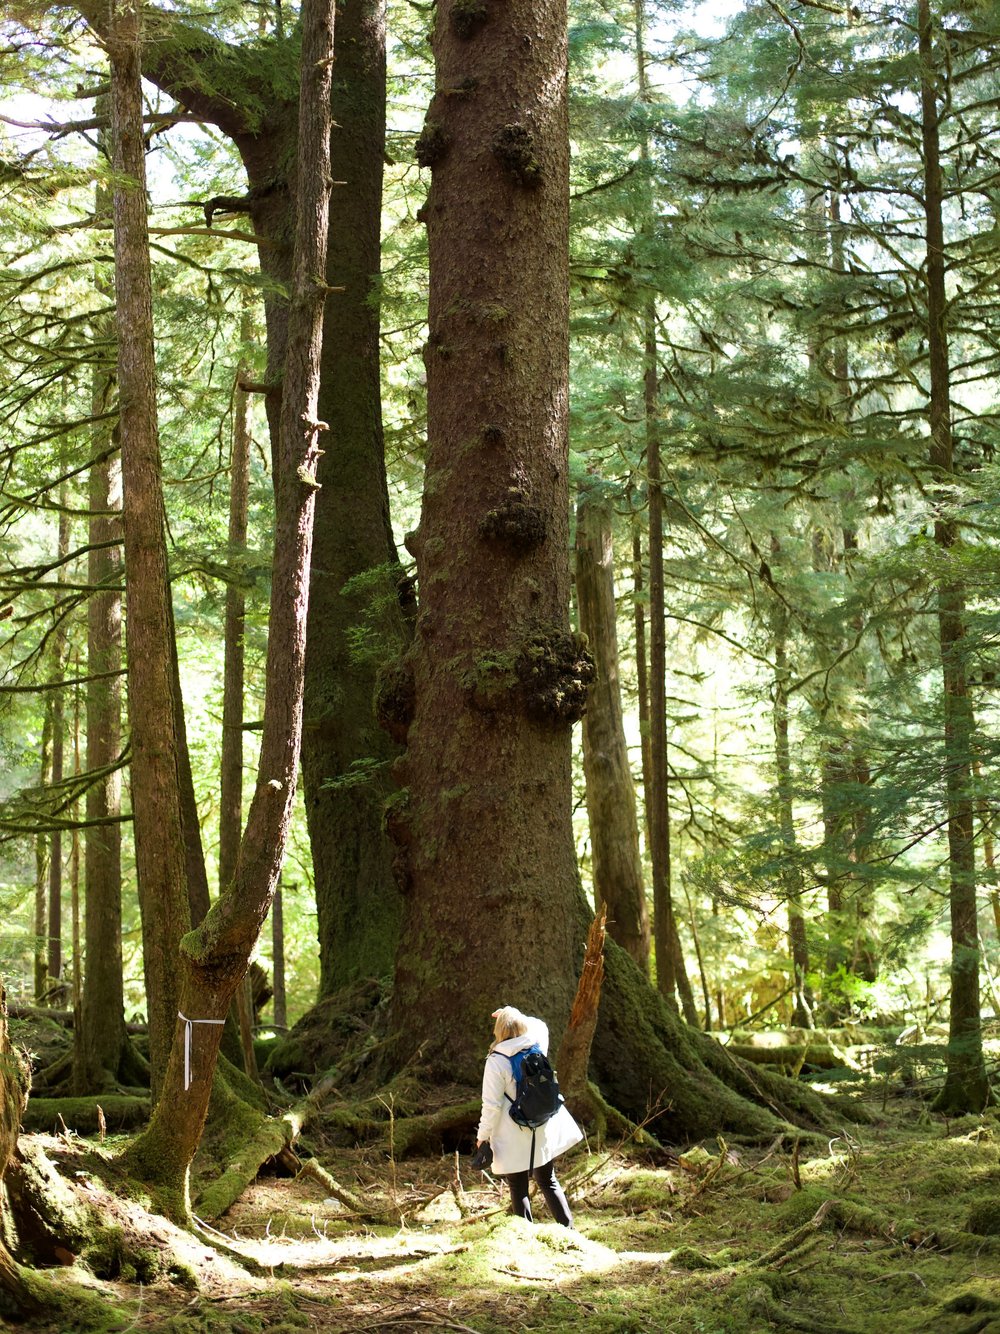   Giant Sitka Spruce  